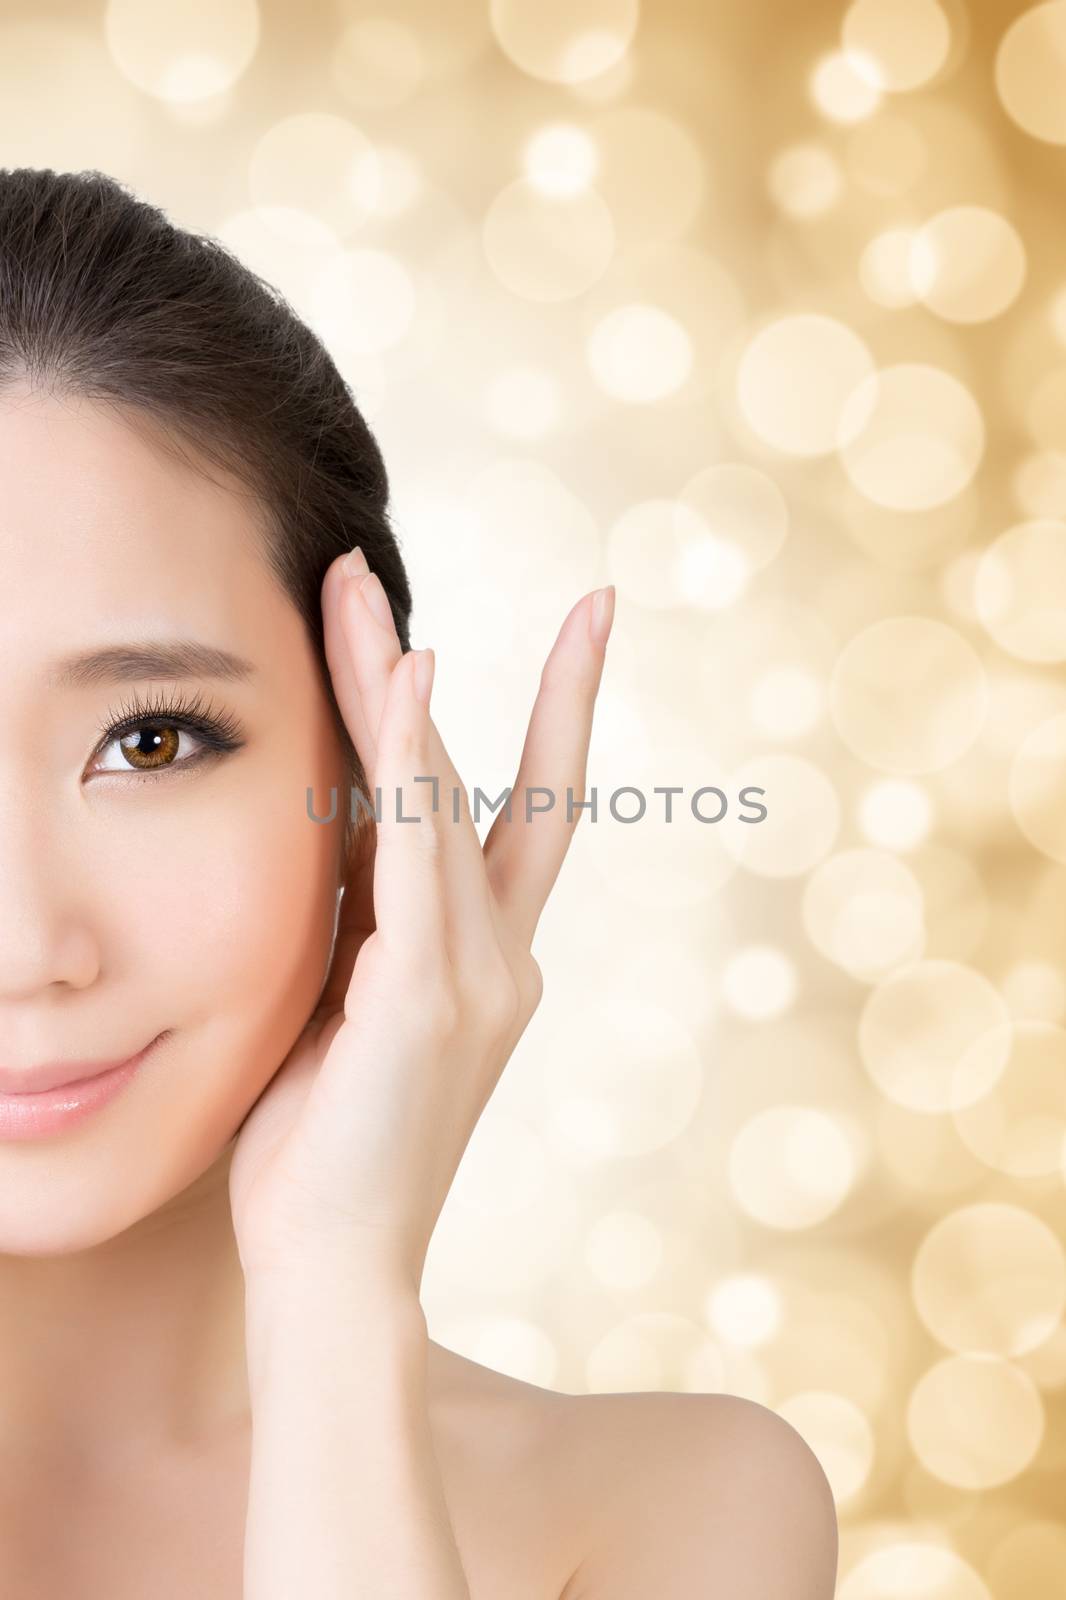 Asian beauty face closeup portrait with clean and fresh elegant lady. Studio shot.